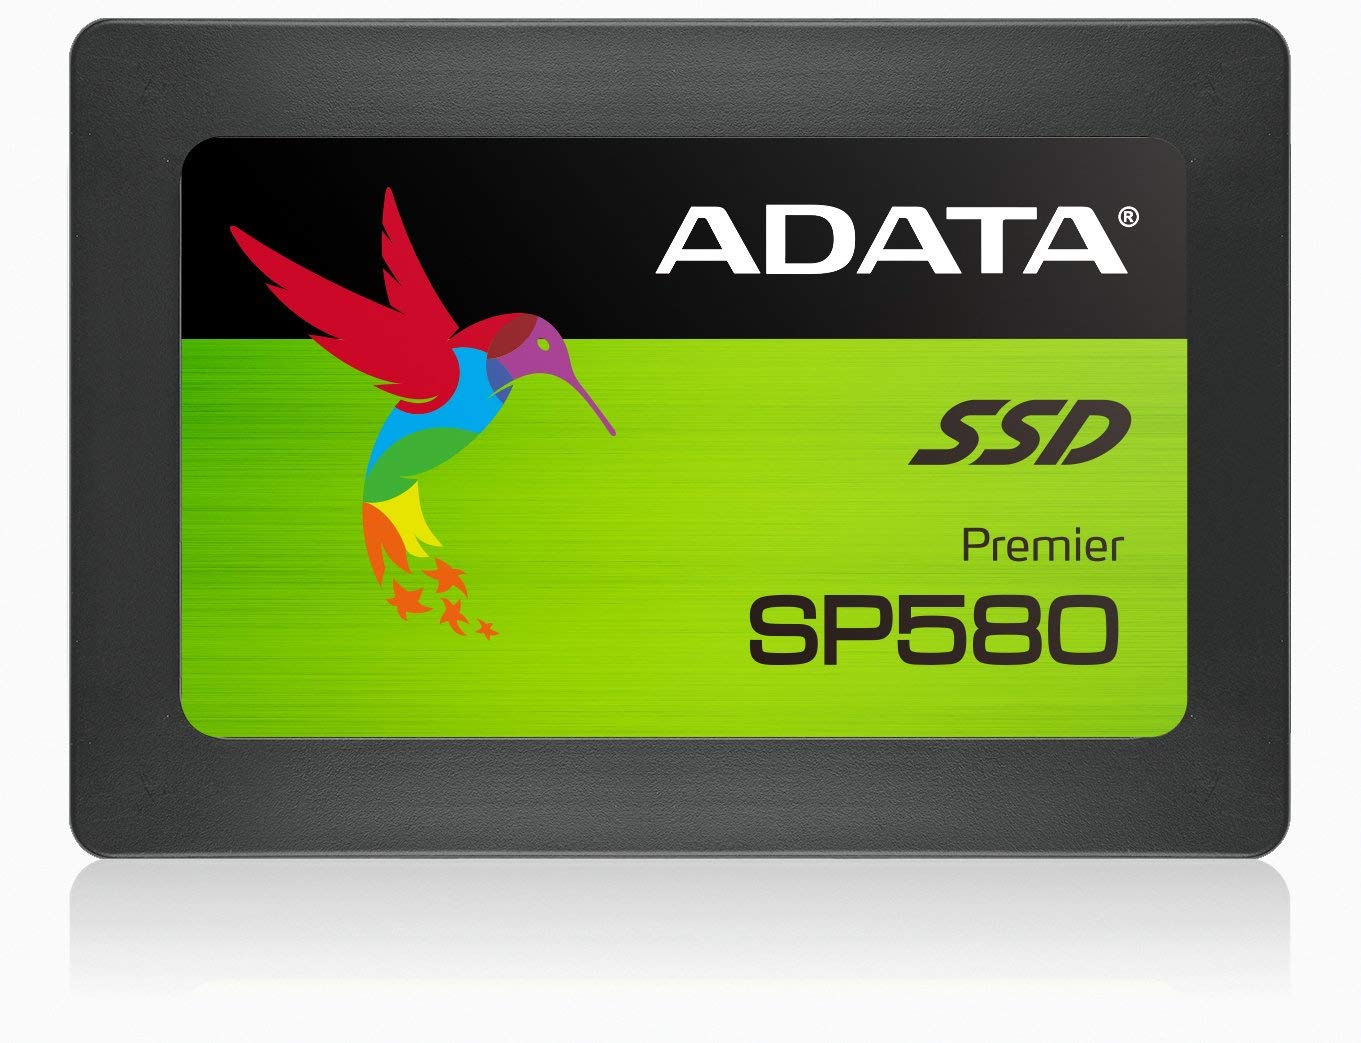 Disco duro sólido Serial ATA III 120GB solo 21,5€